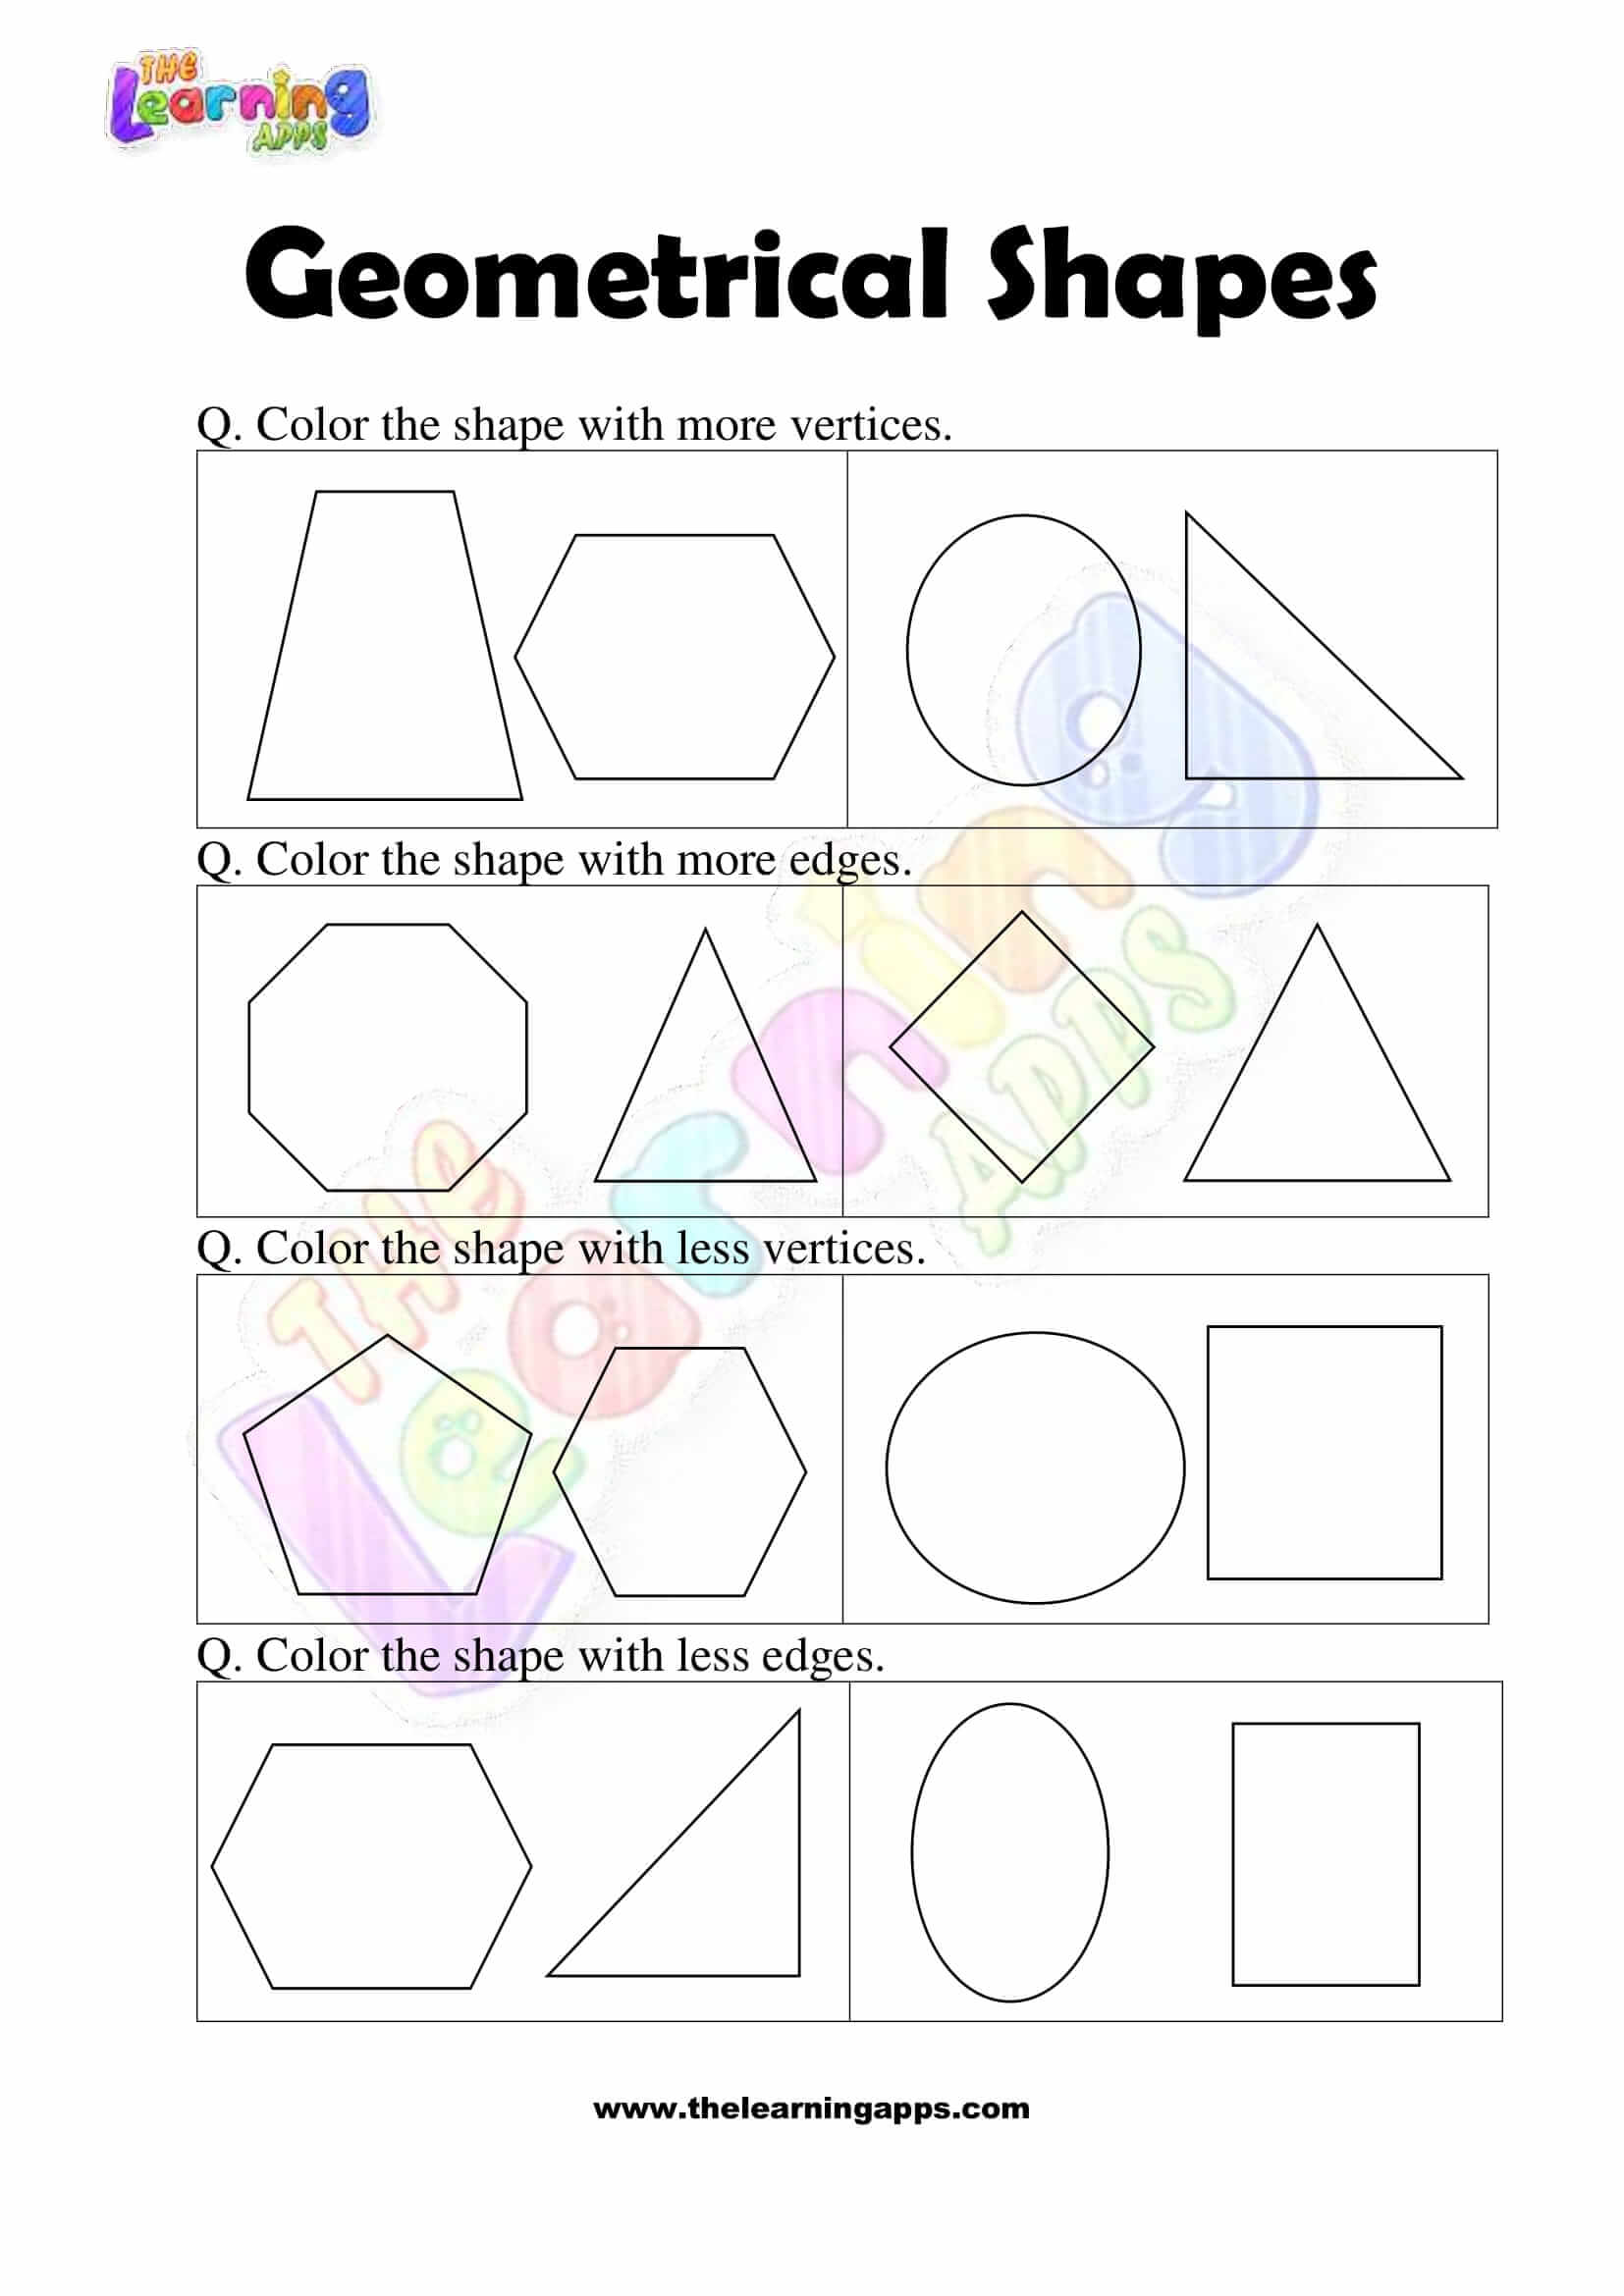 Geometrical Shapes - Grade 2 - Activity 7